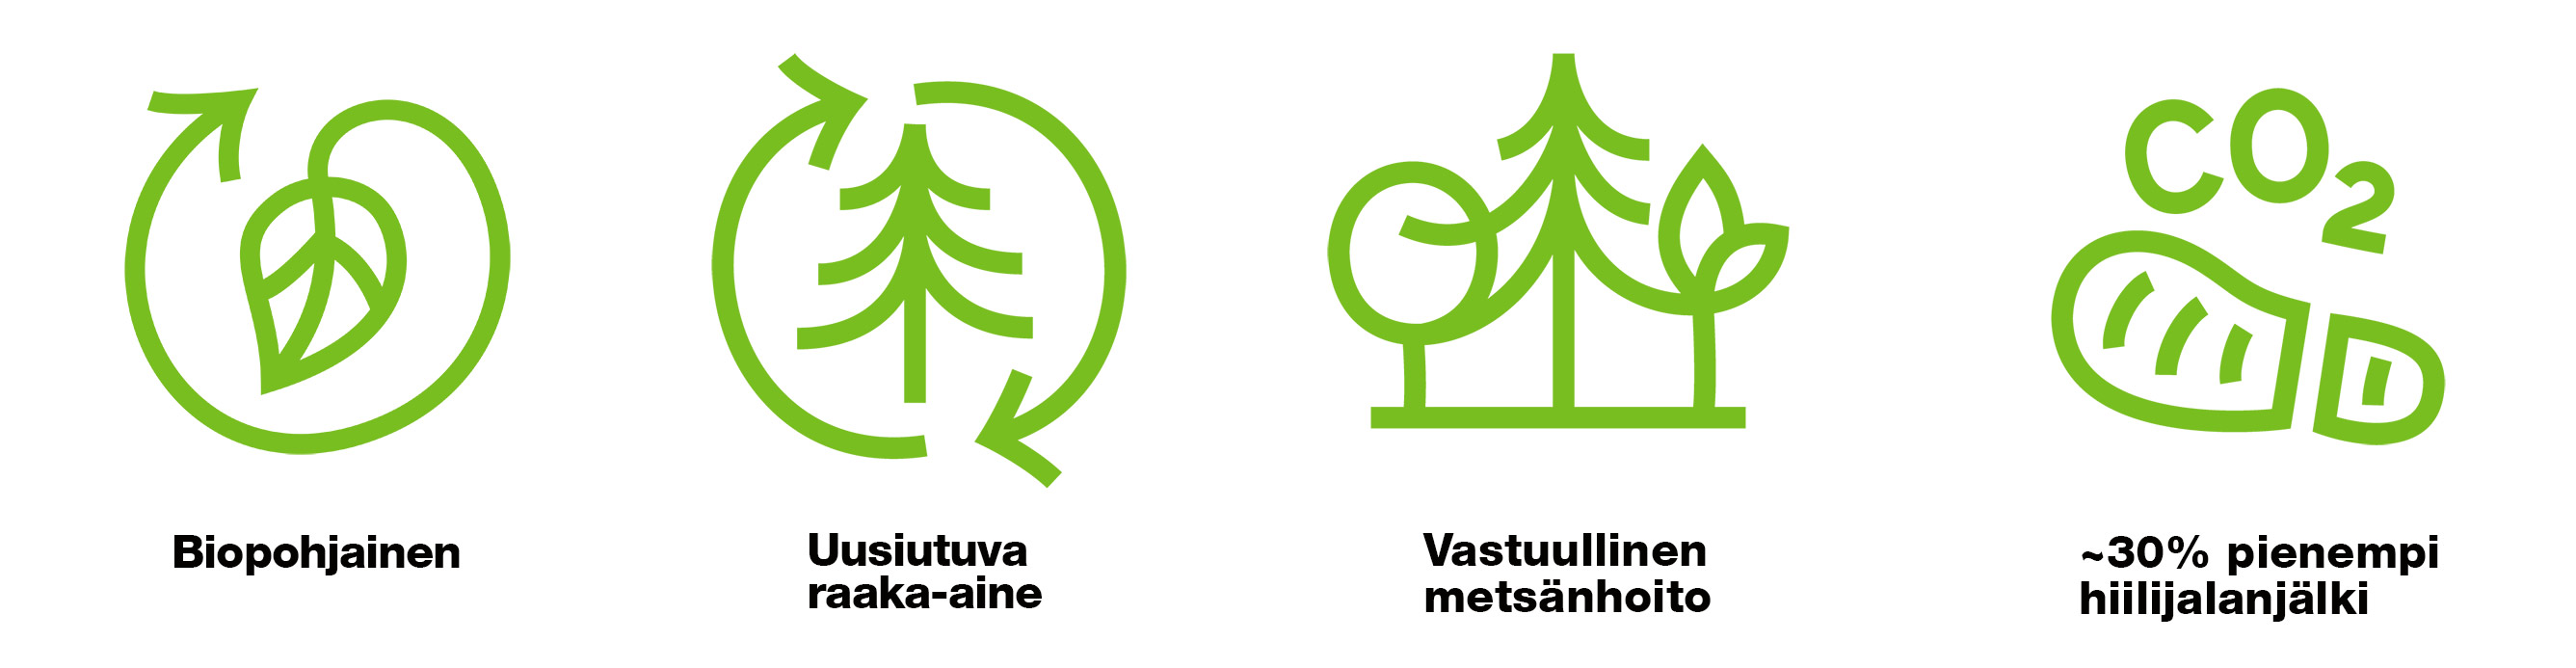 NaturaFluff Eco pictogramms